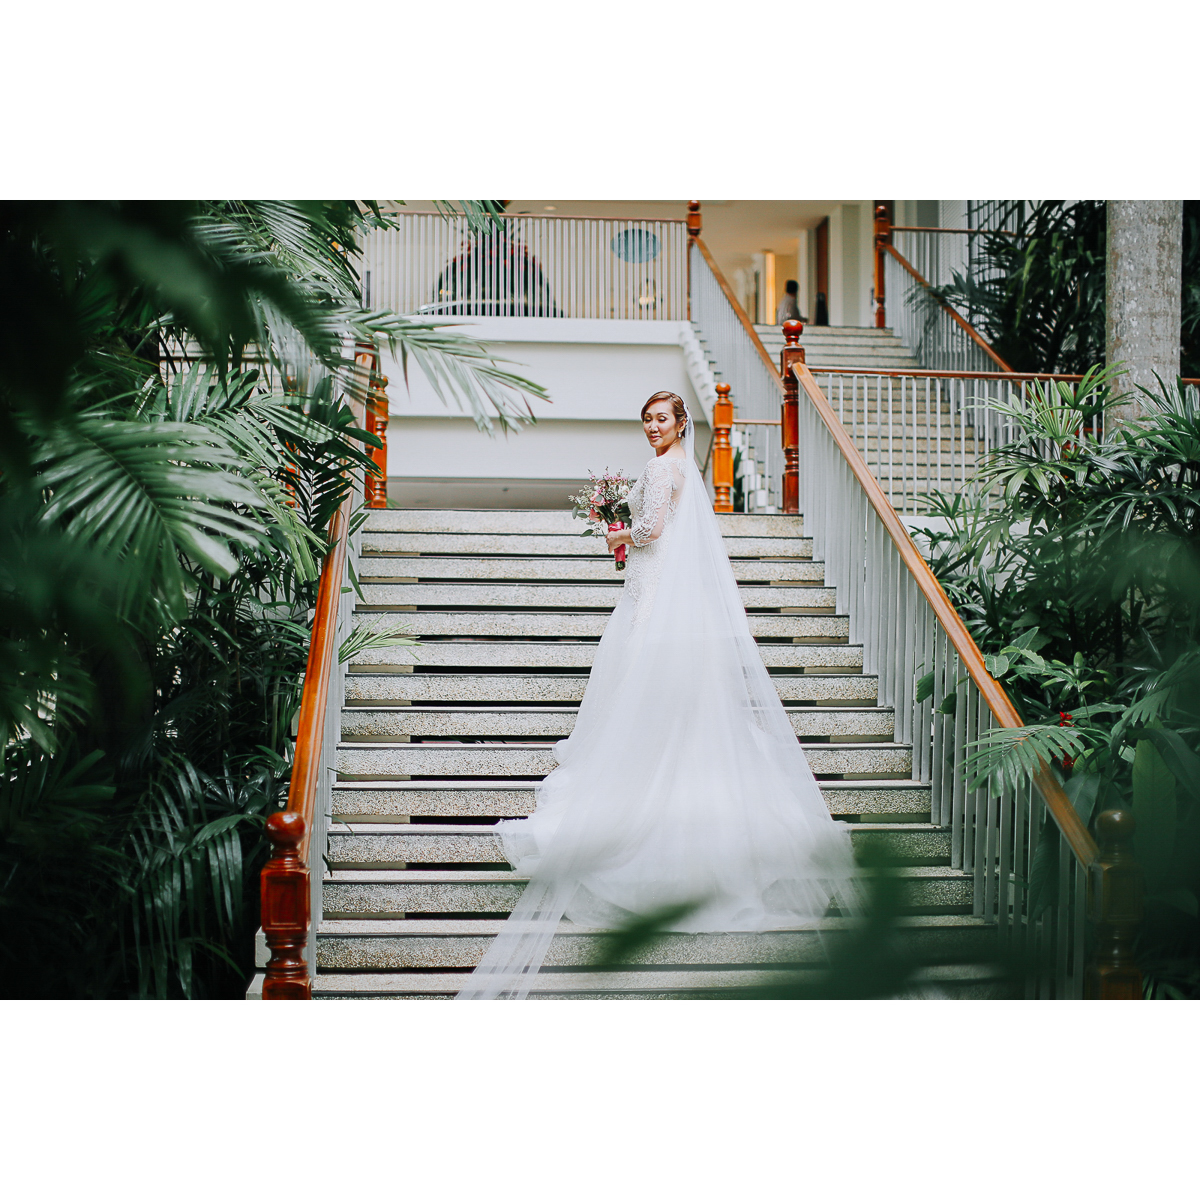 shang mactan wedding0028 - Coleen & Seigfred's Shangrila Mactan Cebu Destination Wedding